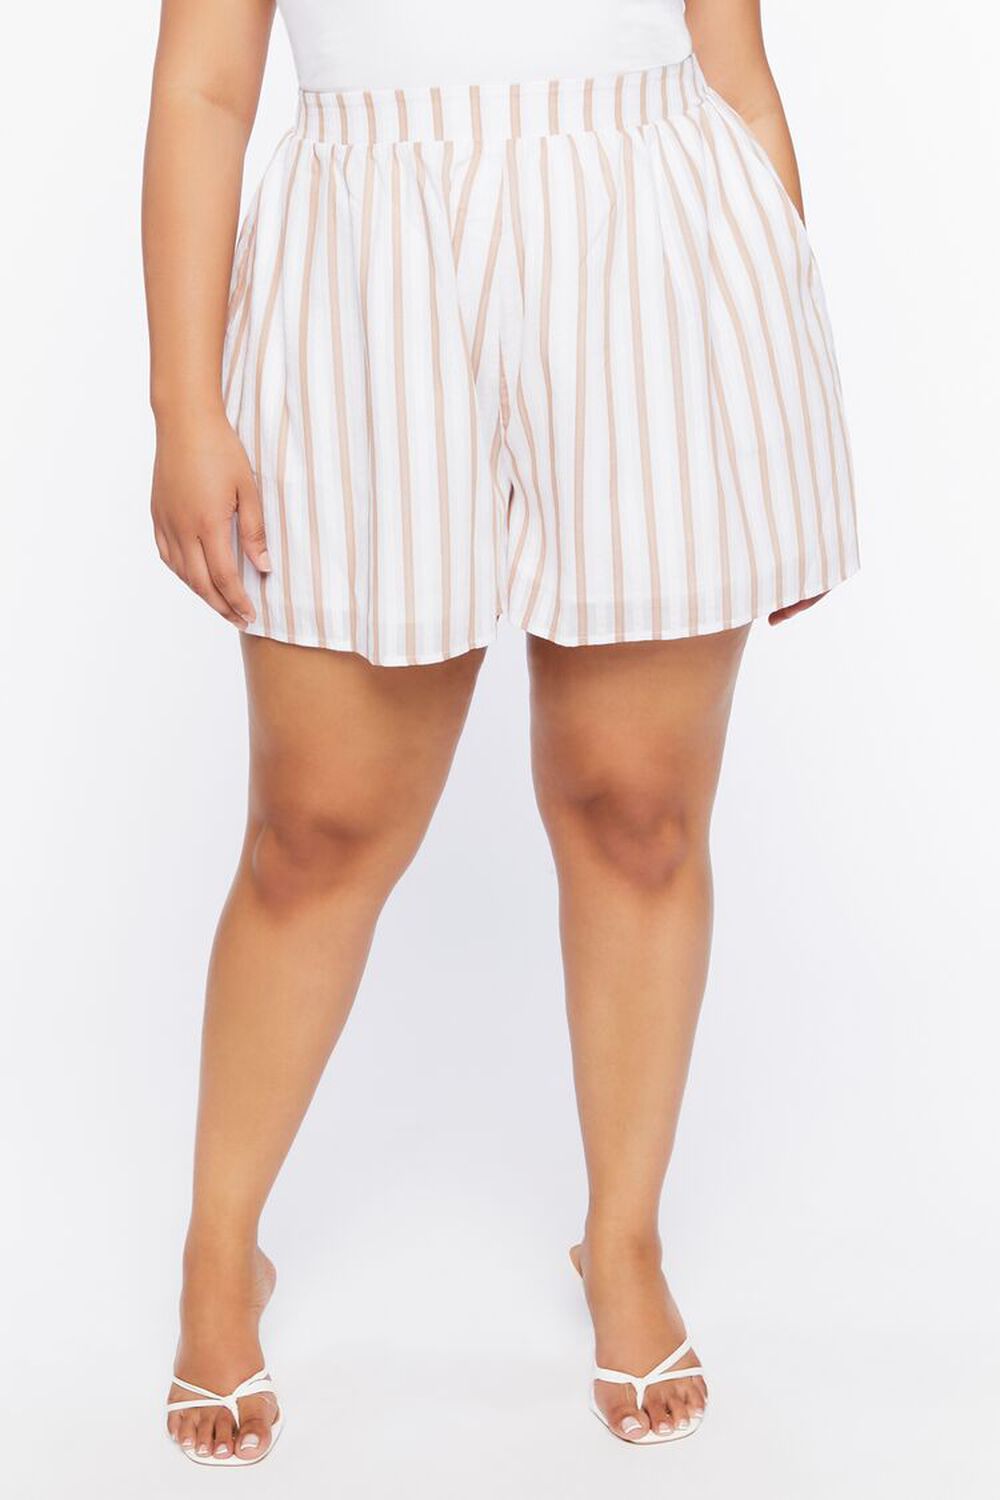 Plus Size Striped Shorts, image 2